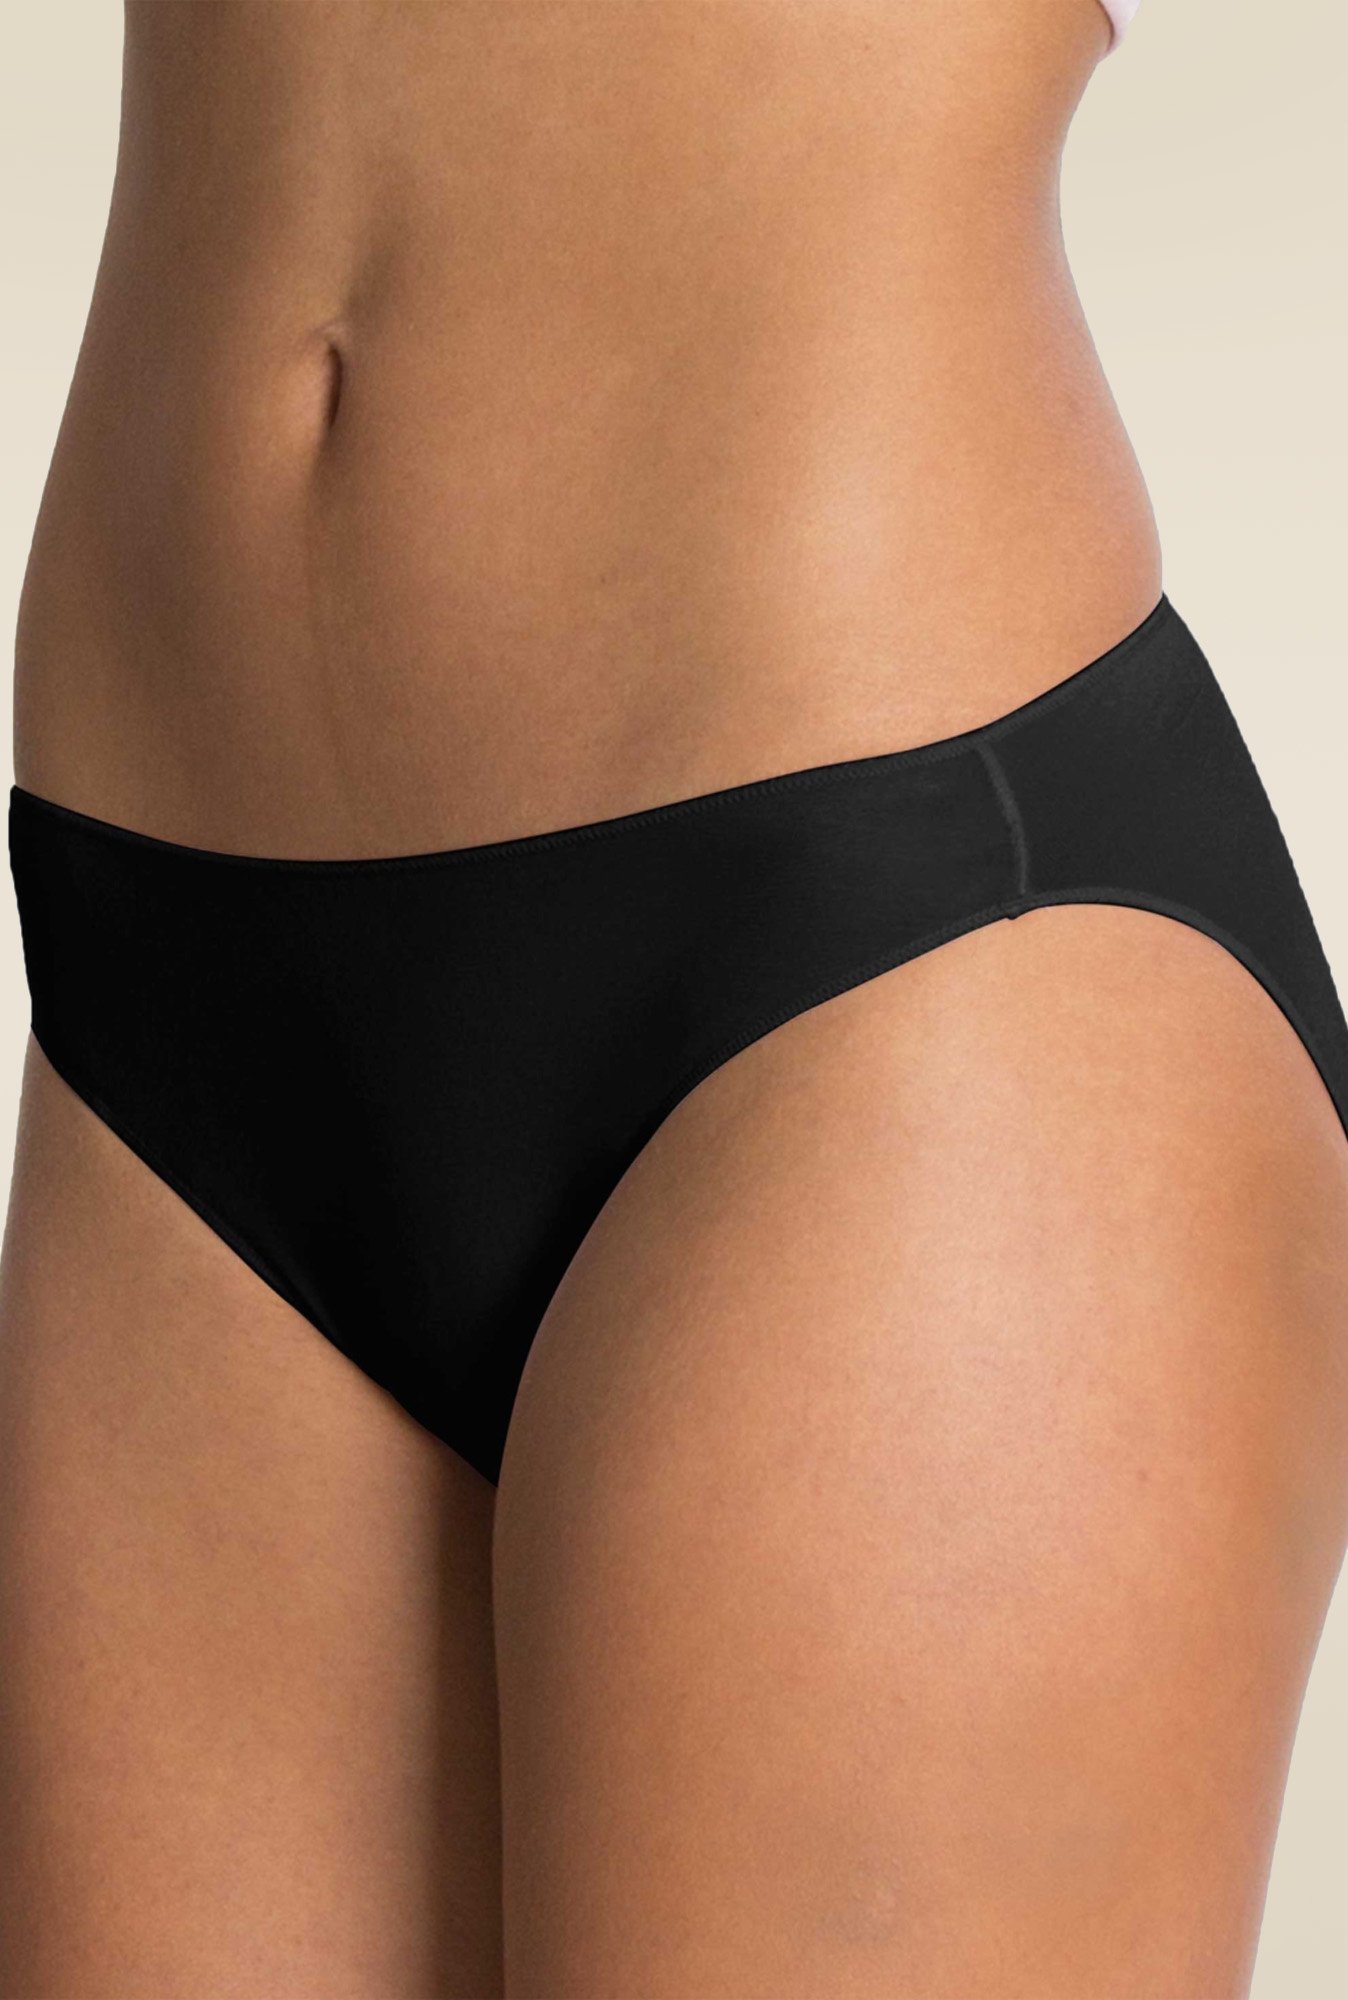 Cotton Black Plain Jockey Bikini Panties at Rs 449/piece in Pune